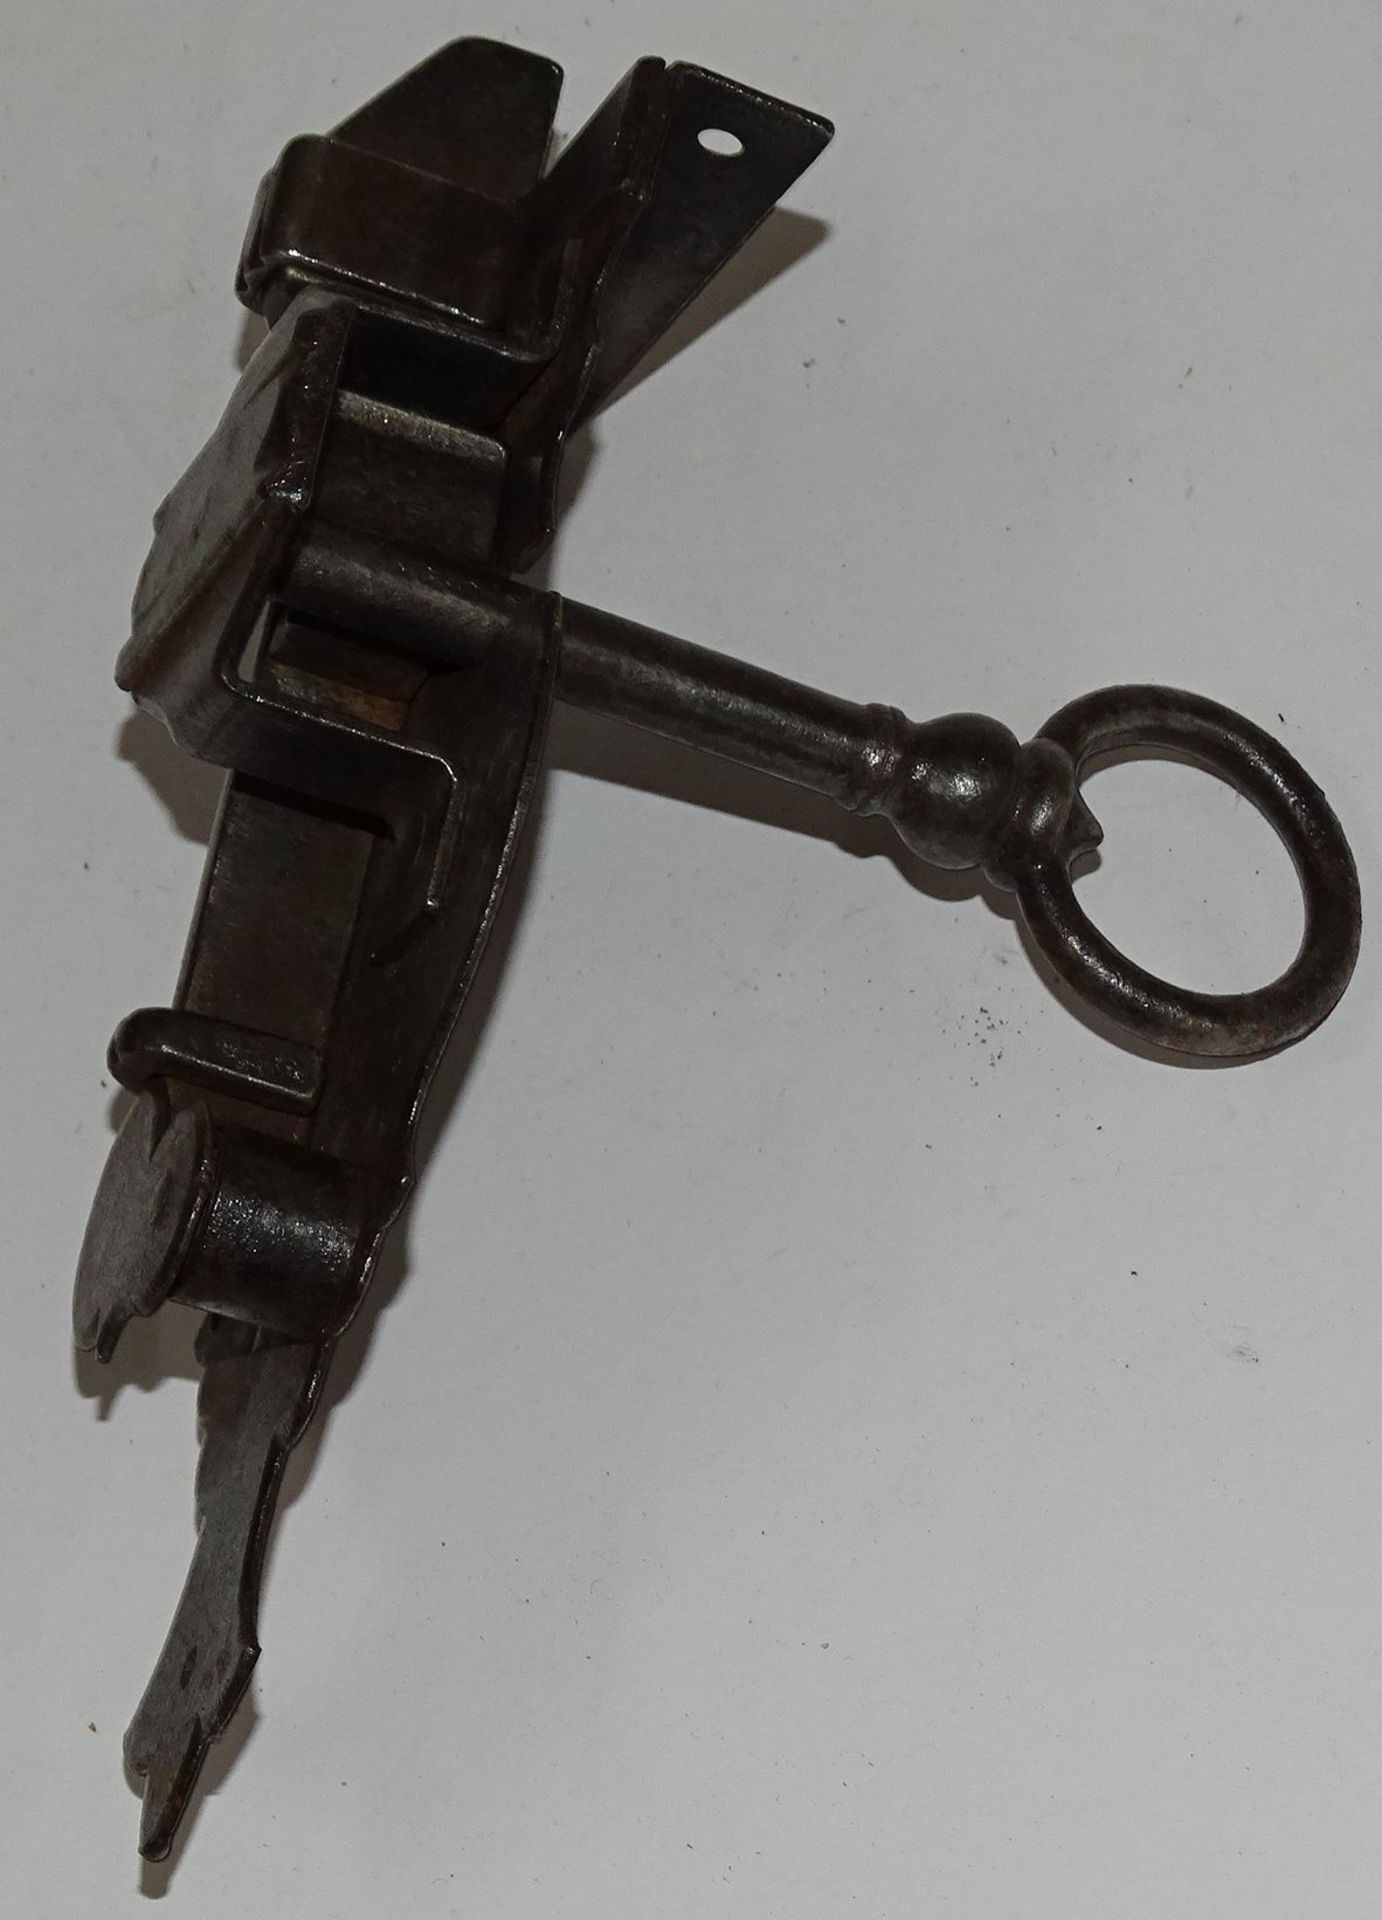 Barockes Türschloss mit Schlüssel, Mechanik funktioniert, 19x9,5 cm - Bild 4 aus 4